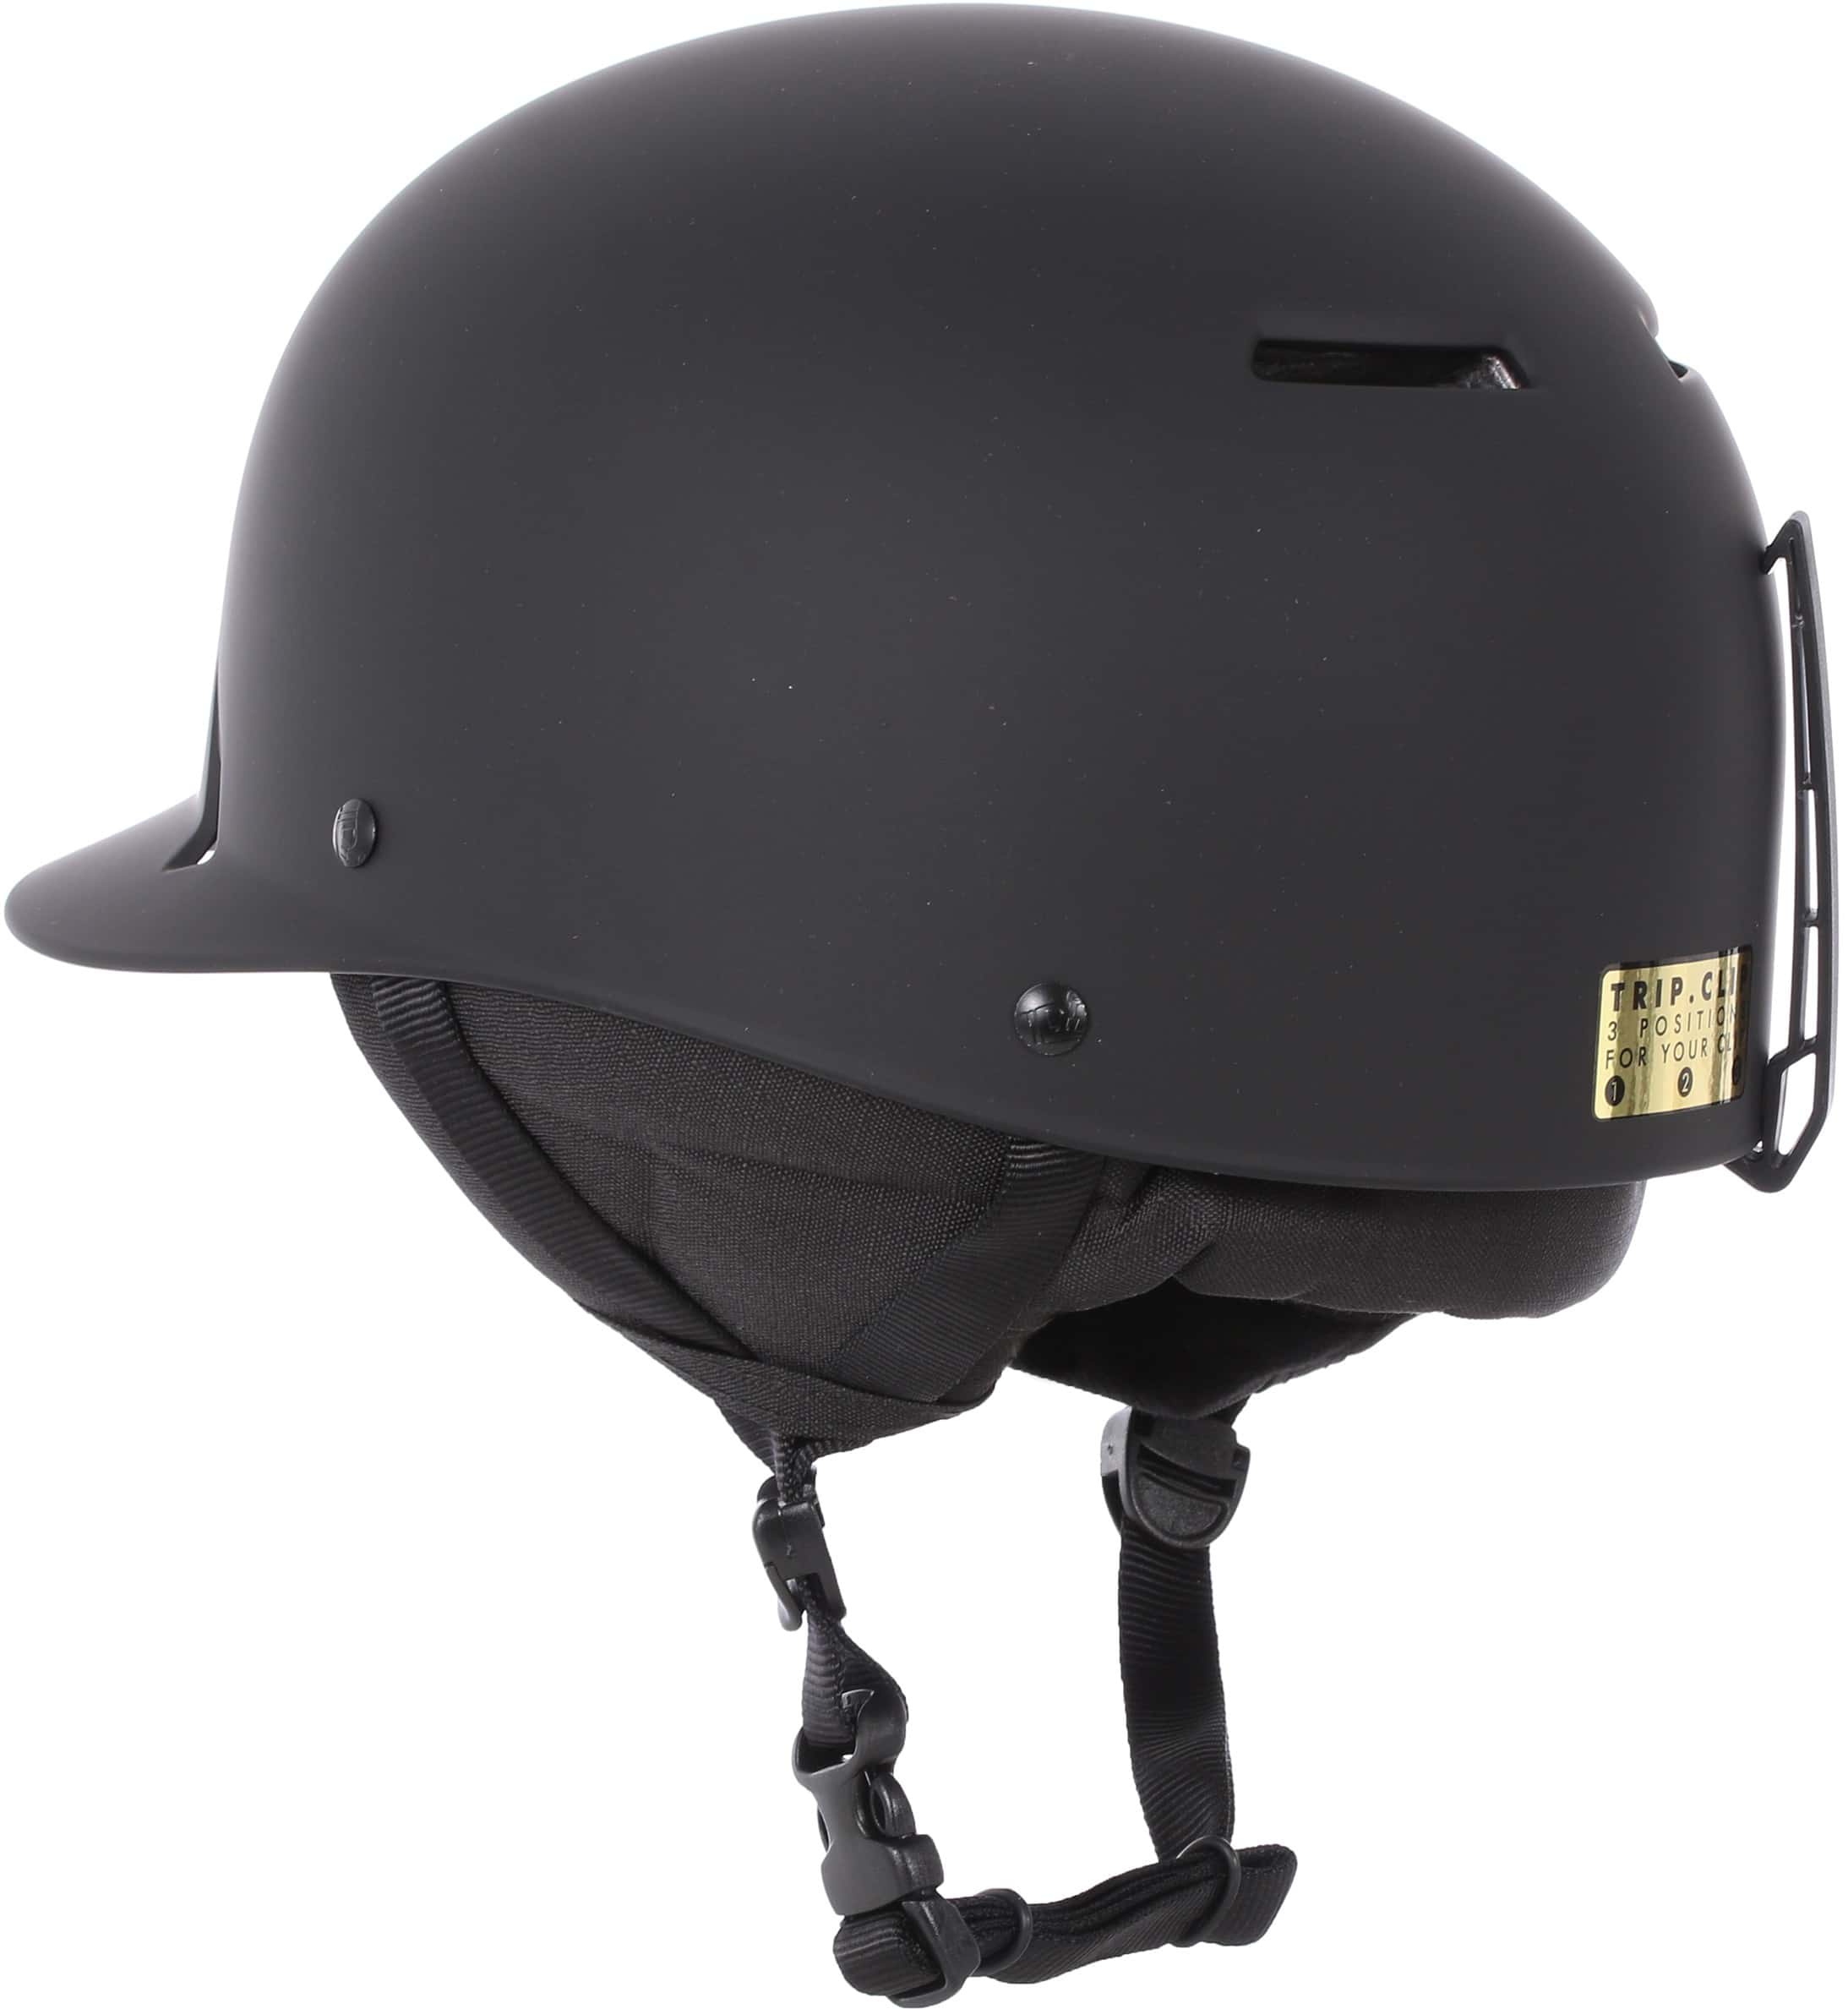 Sandbox Classic 2.0 Snowboard Helmet - black (matte) - Free Shipping